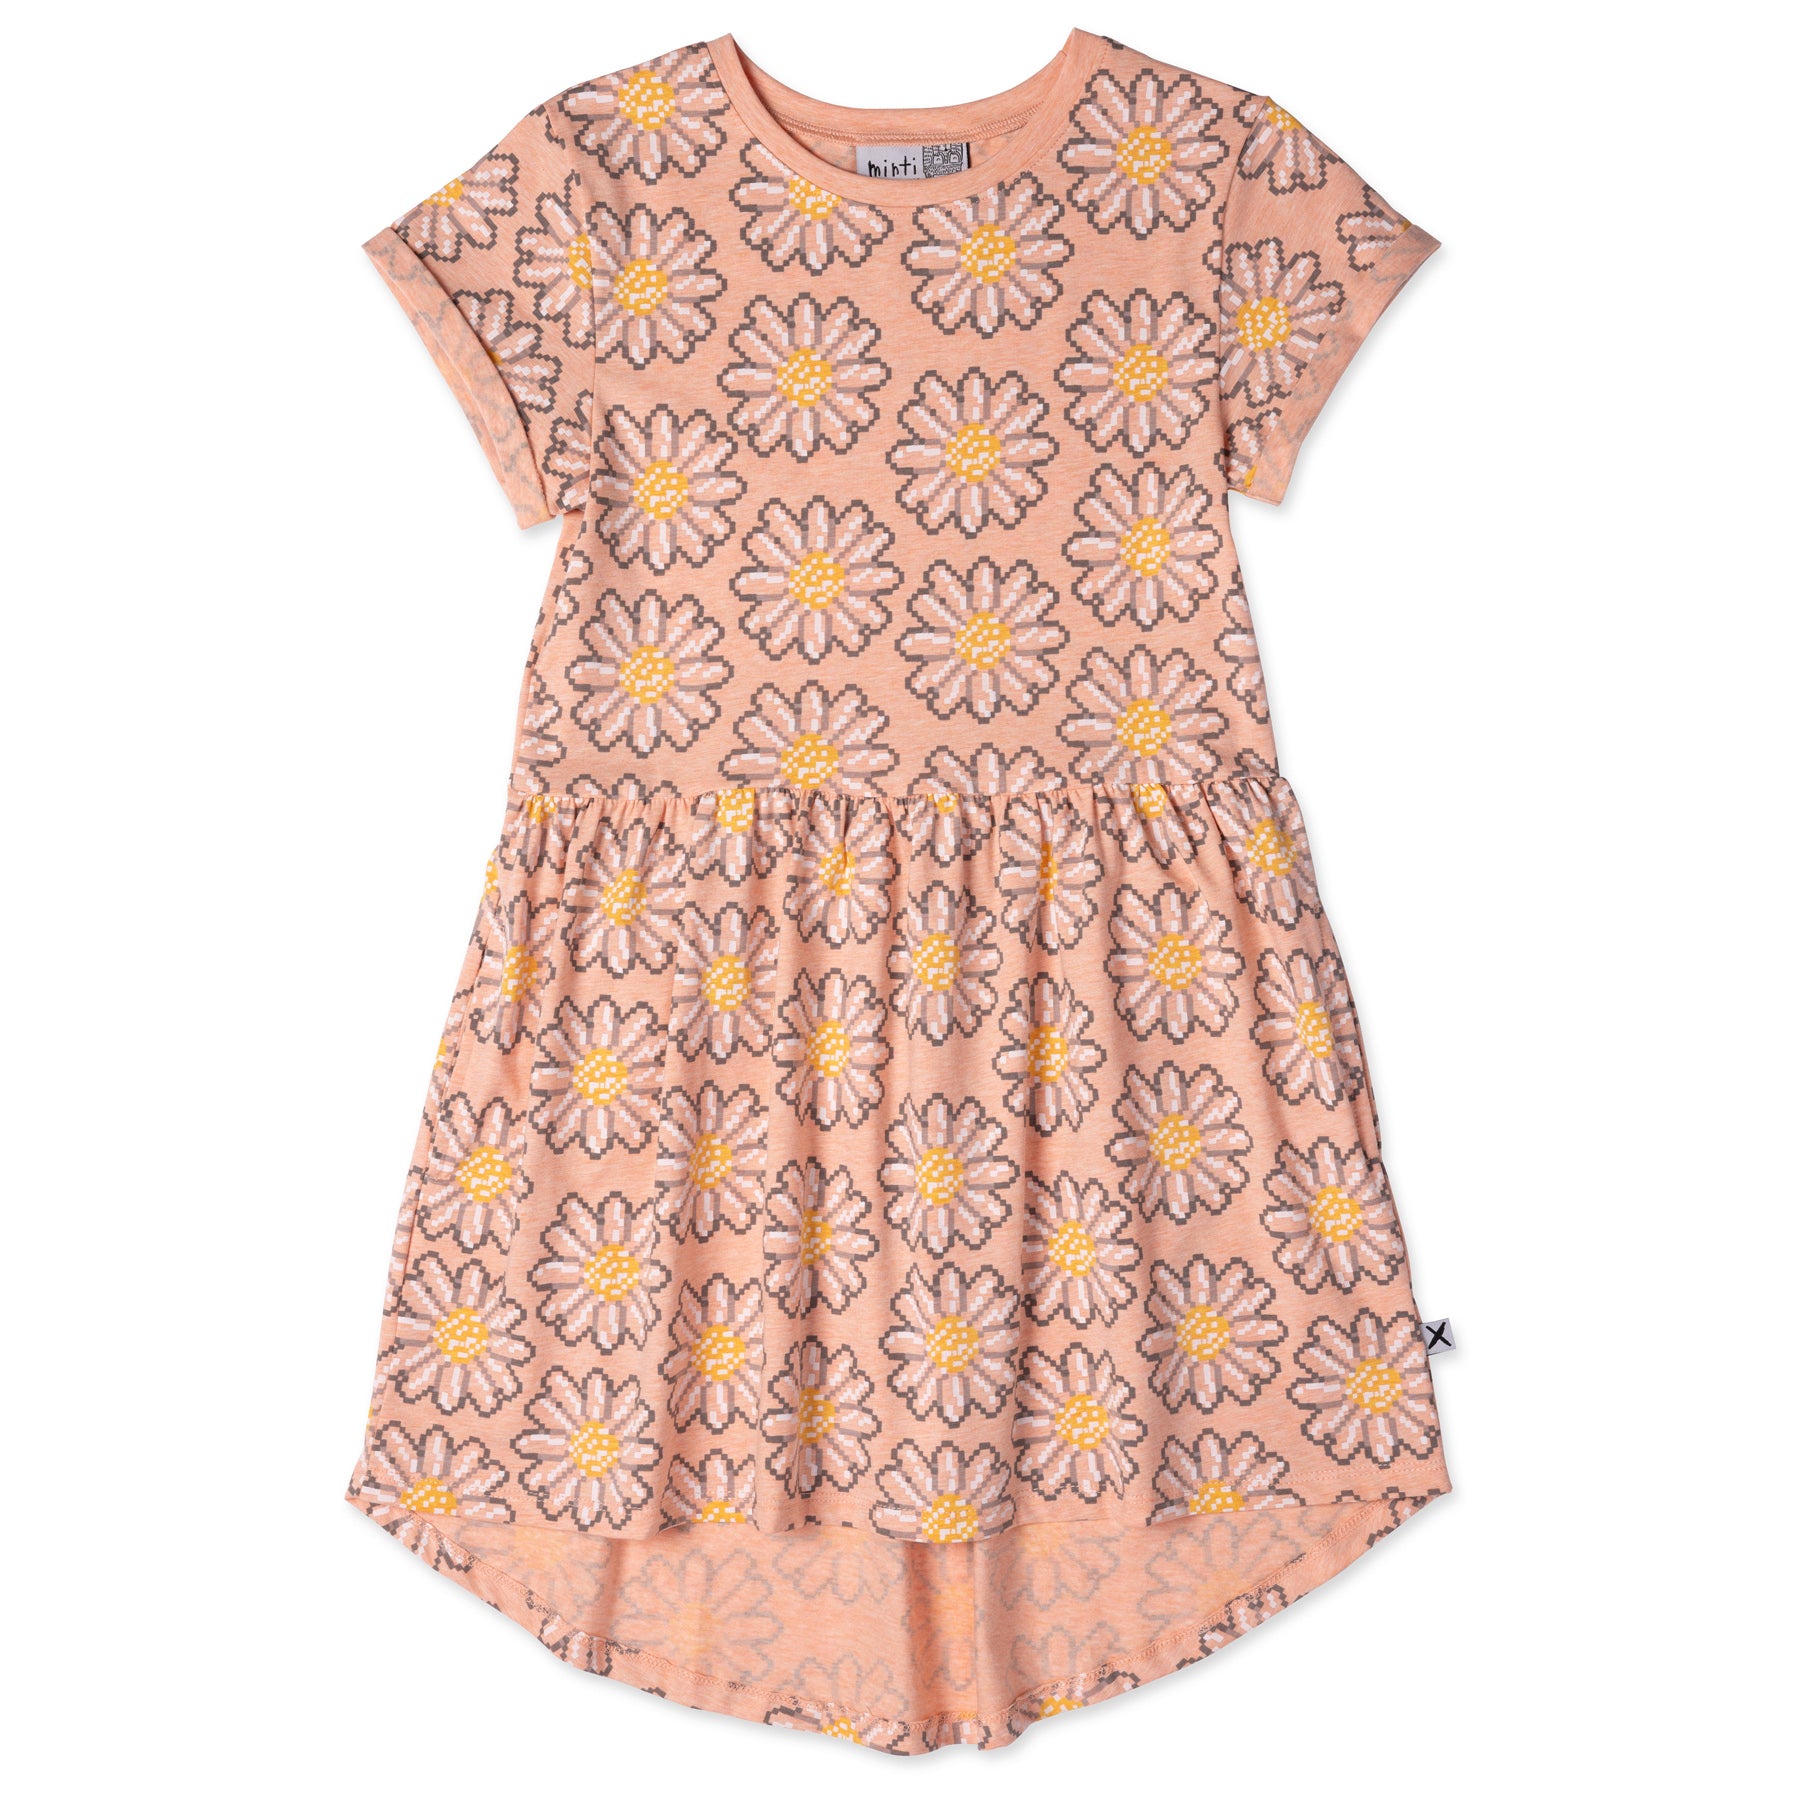 PRE ORDER - Minti - Pixelled Flower Dress - Apricot Marle